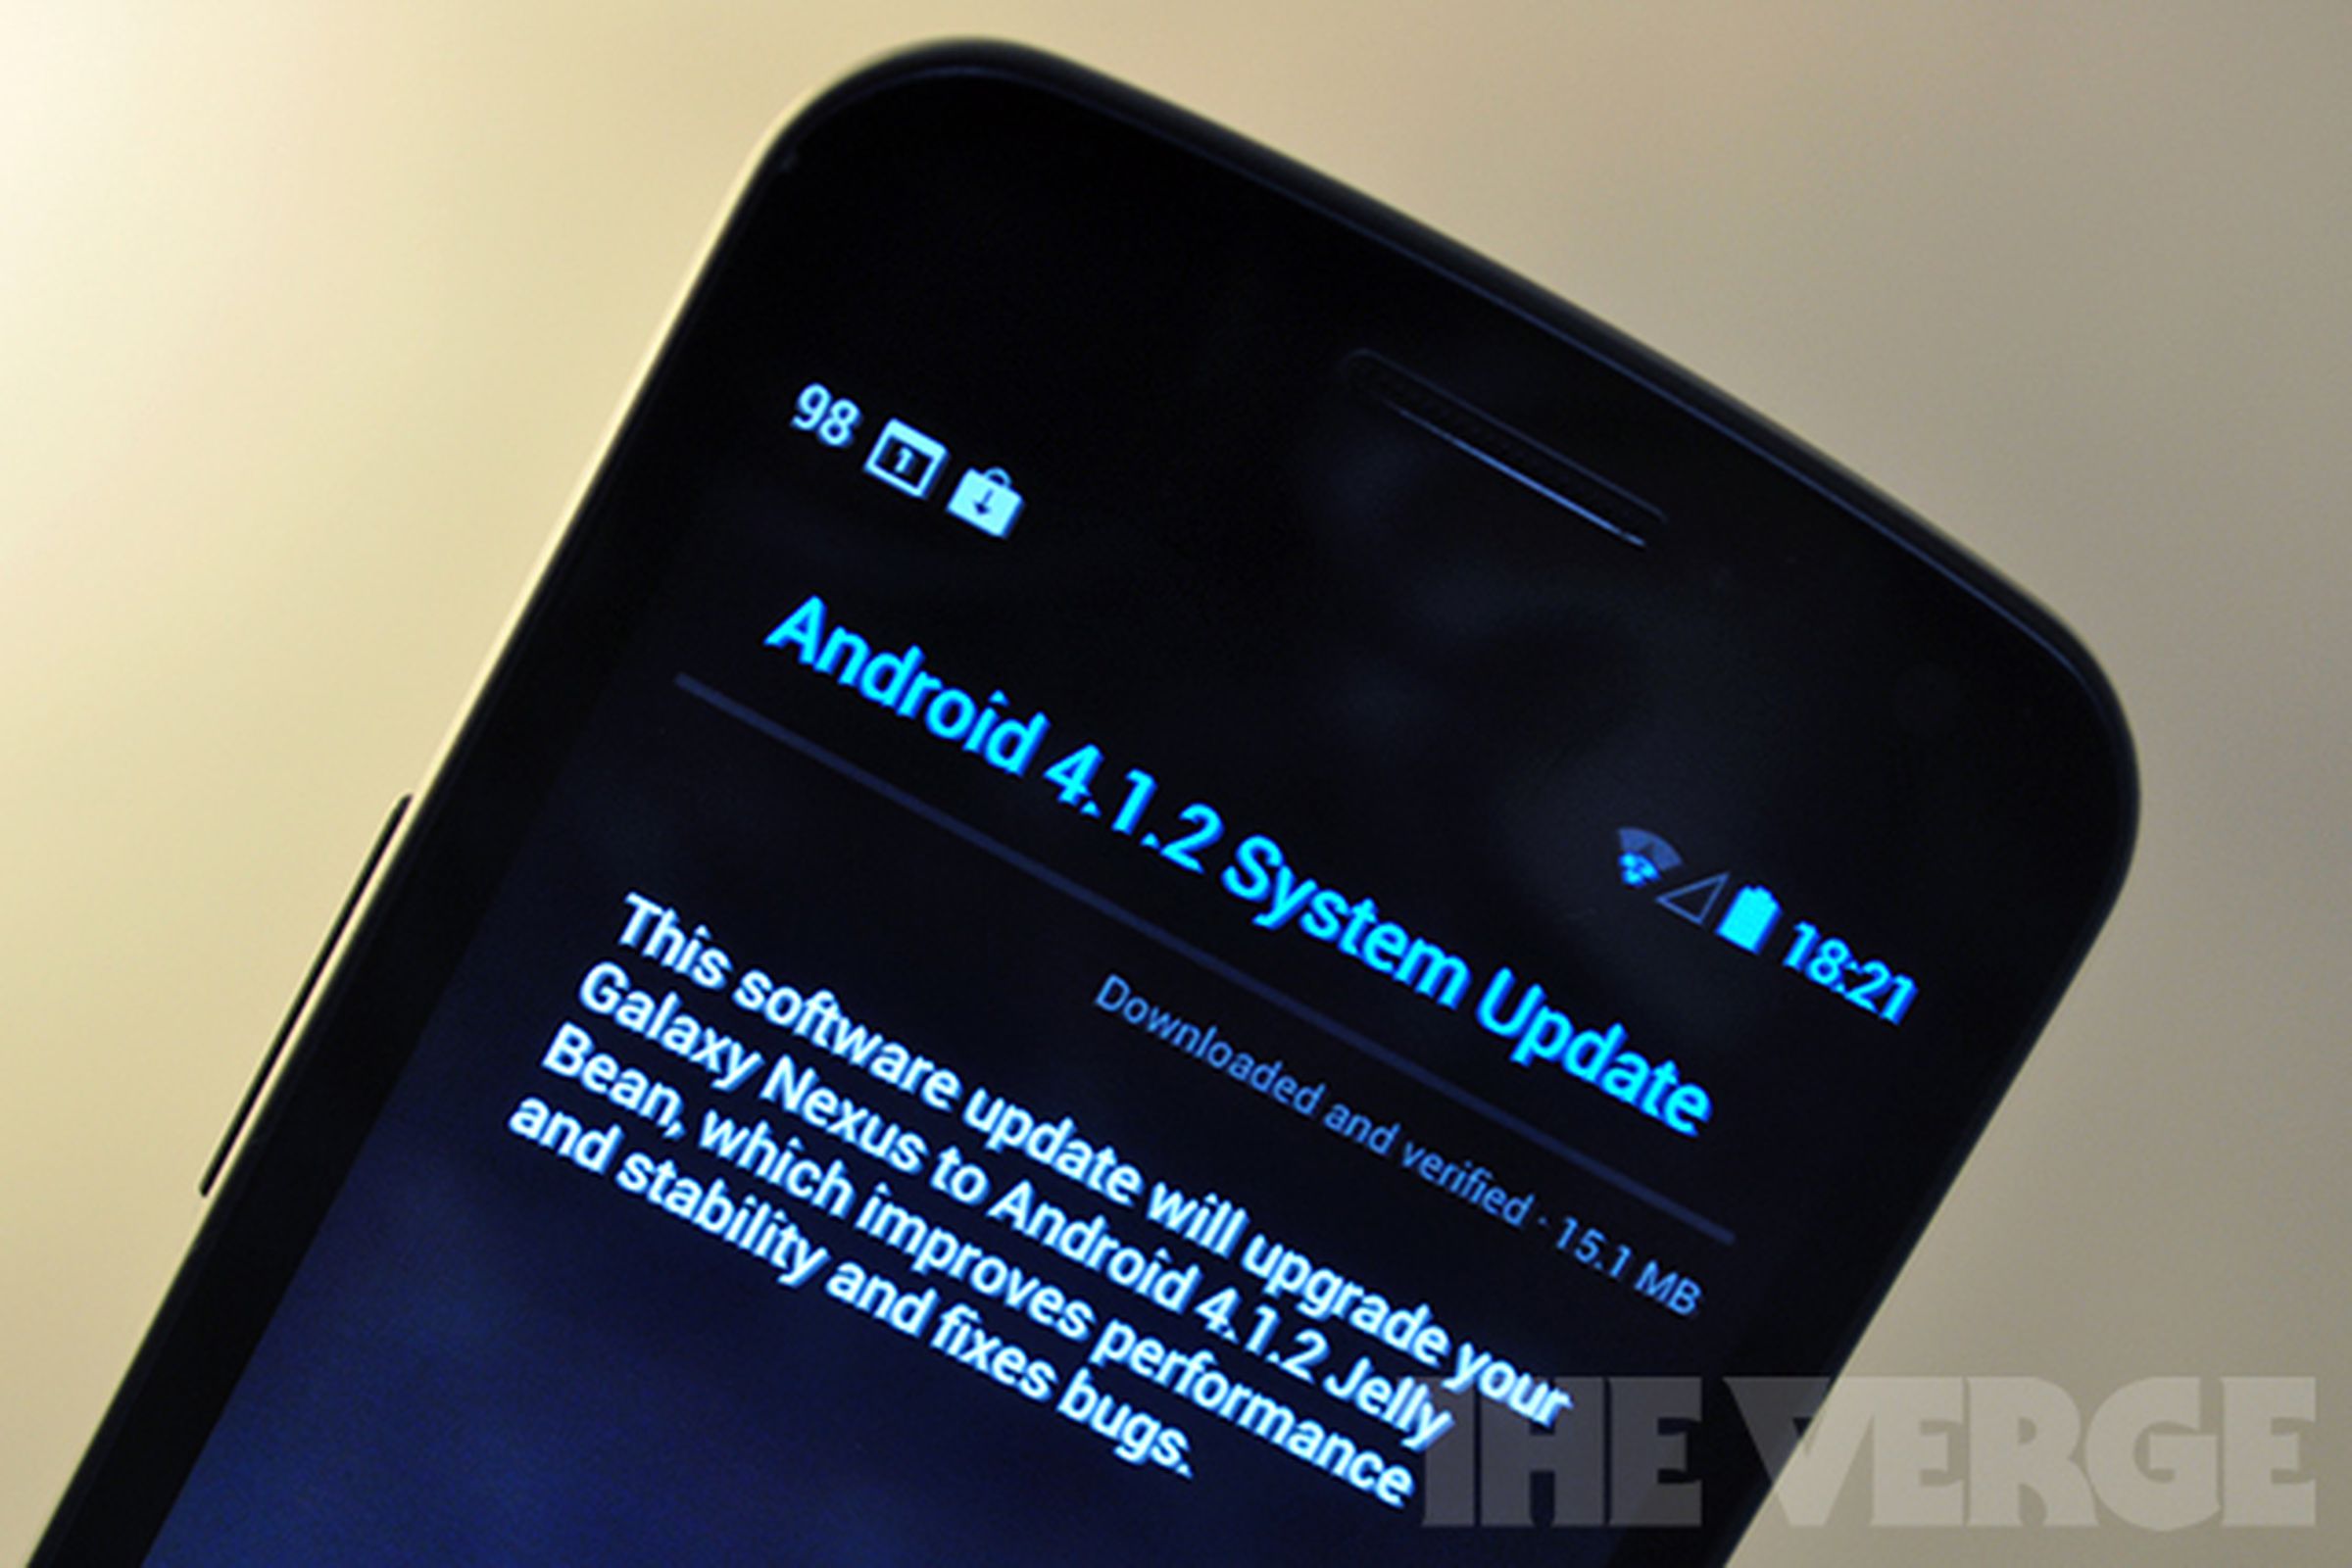 Galaxy Nexus 4.1.2 update